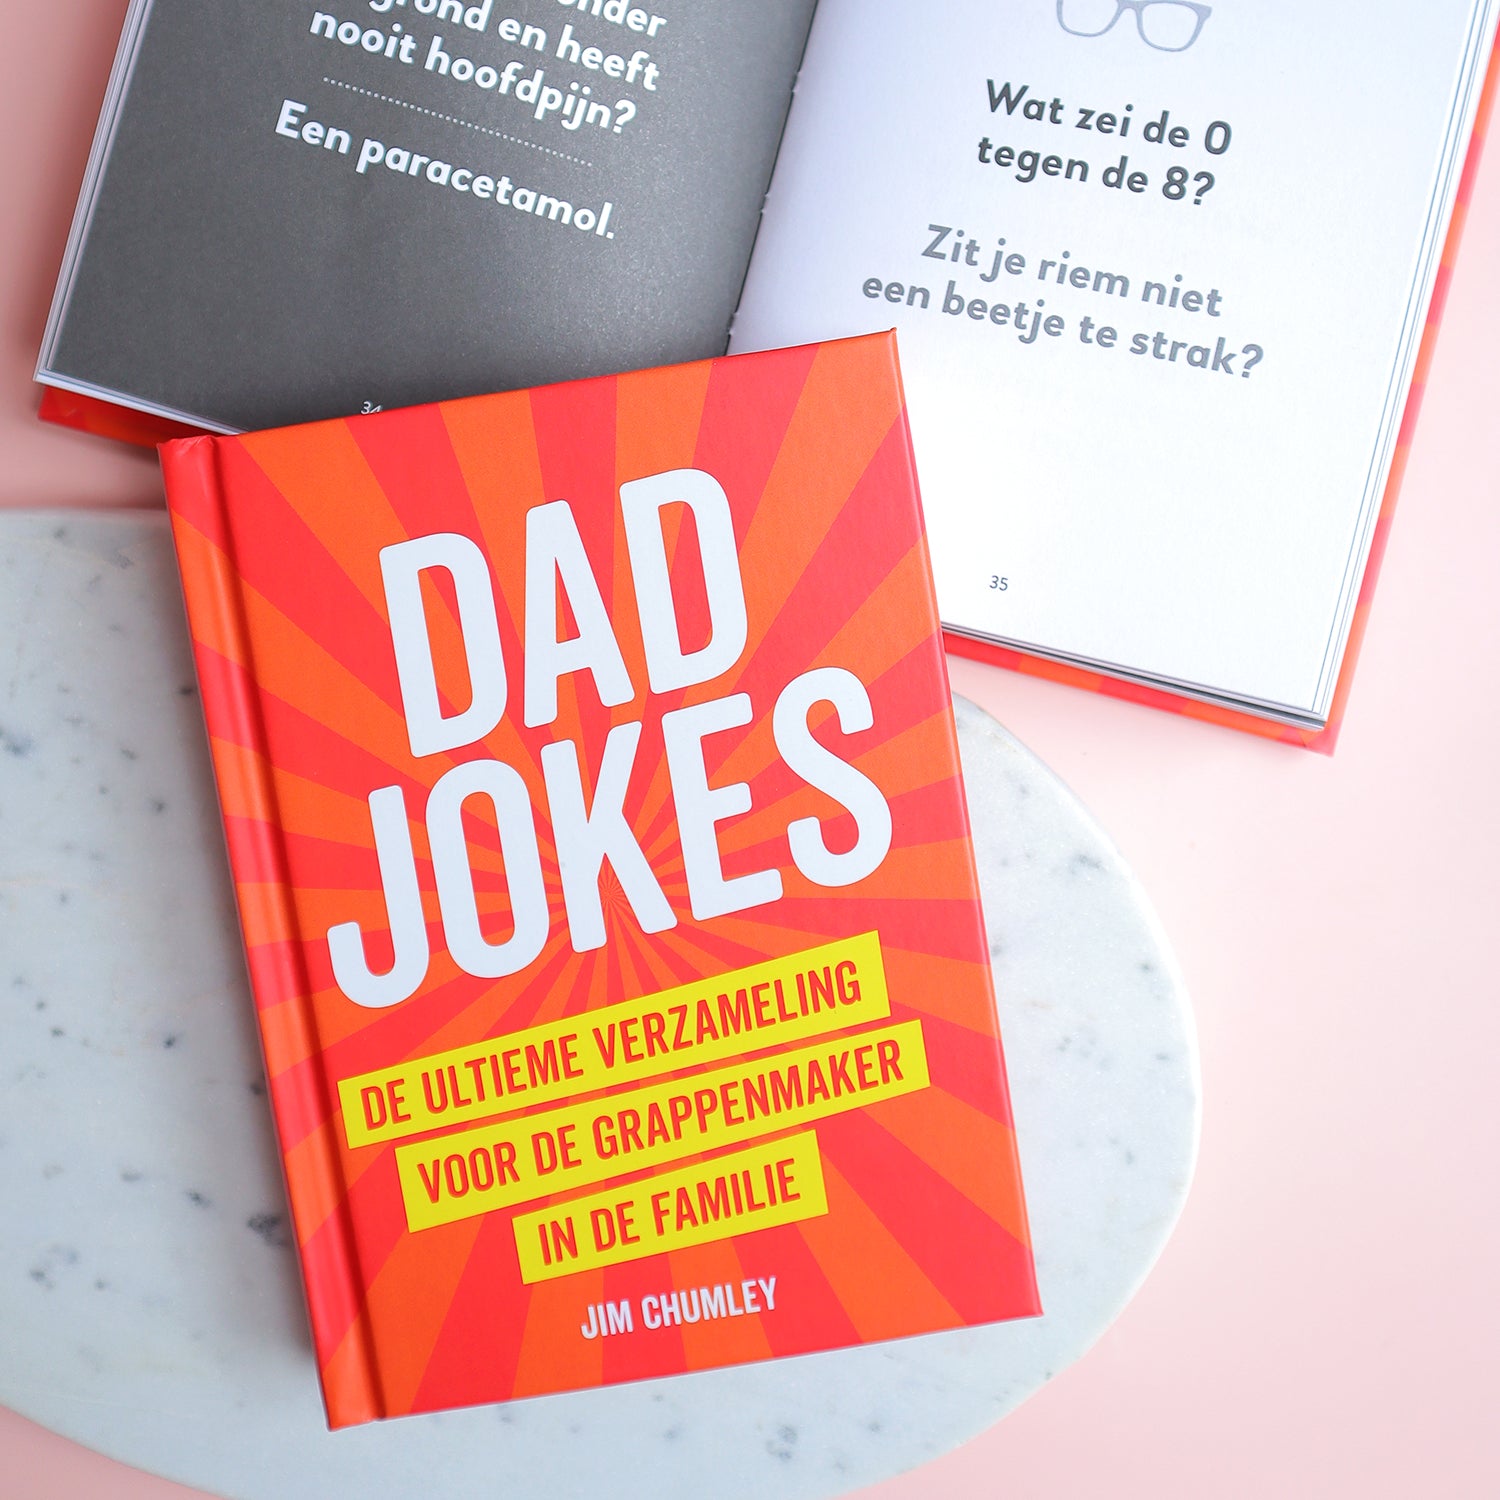 Boek 'Dad Jokes' 8,95 euro